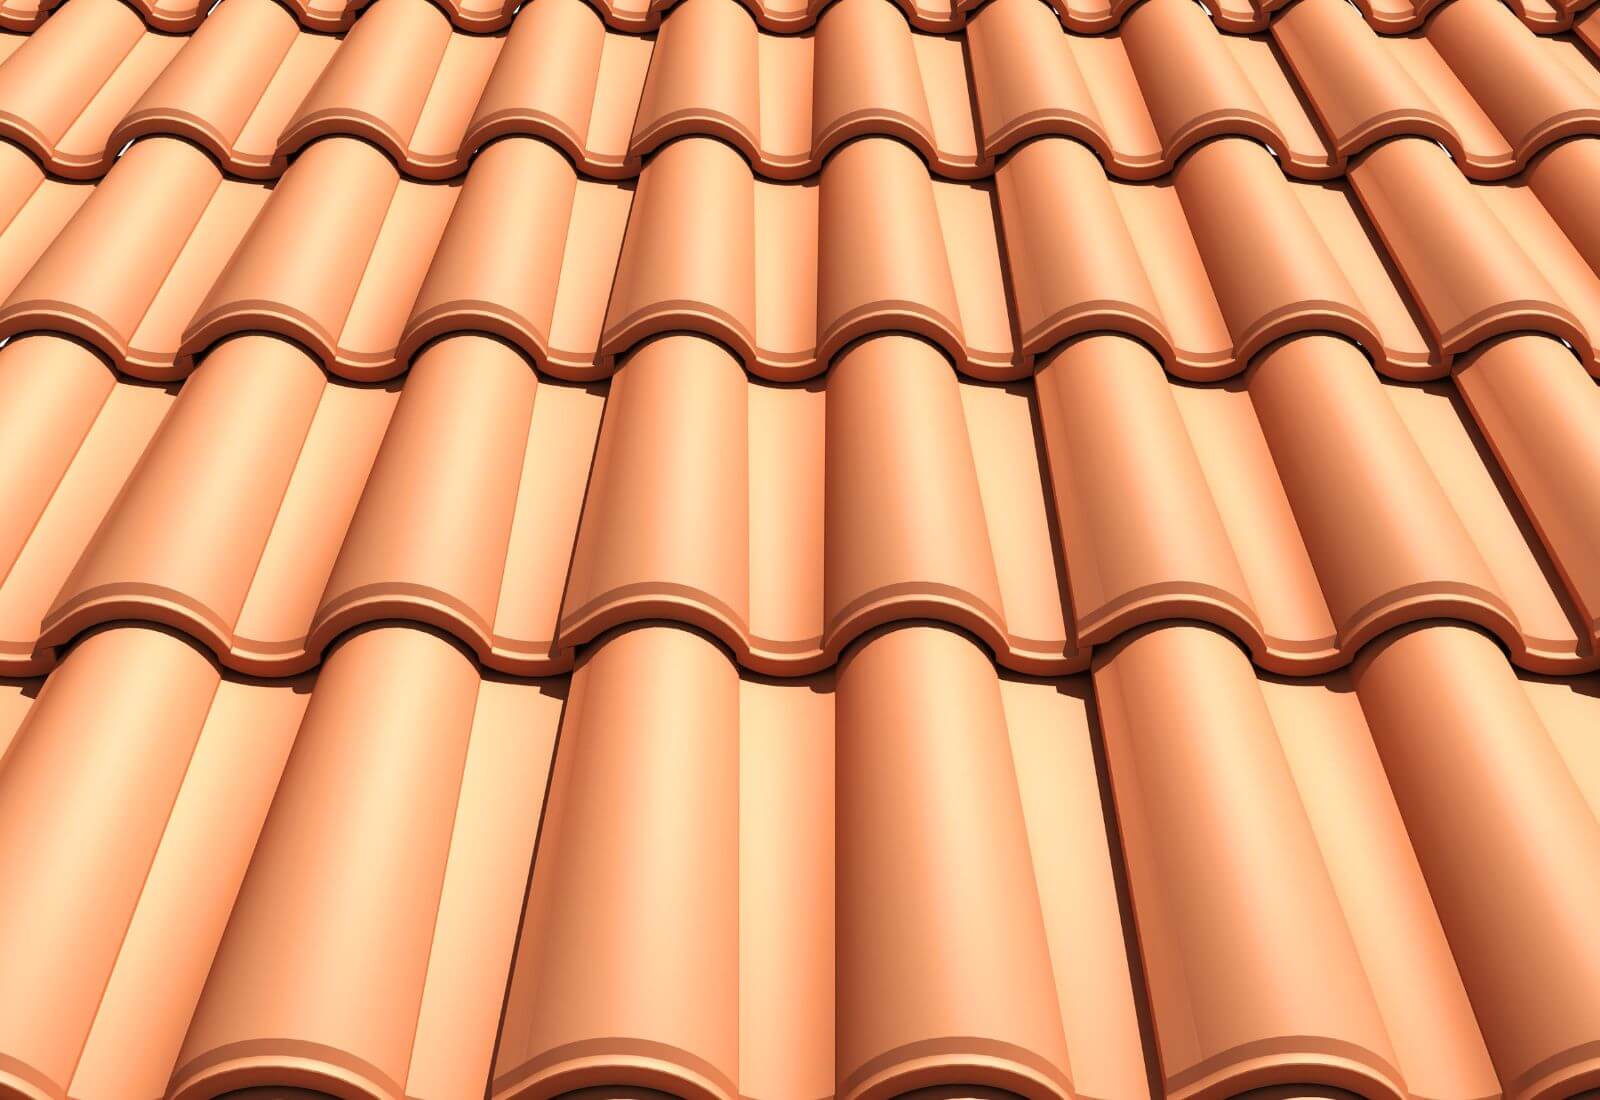 Tile Roof